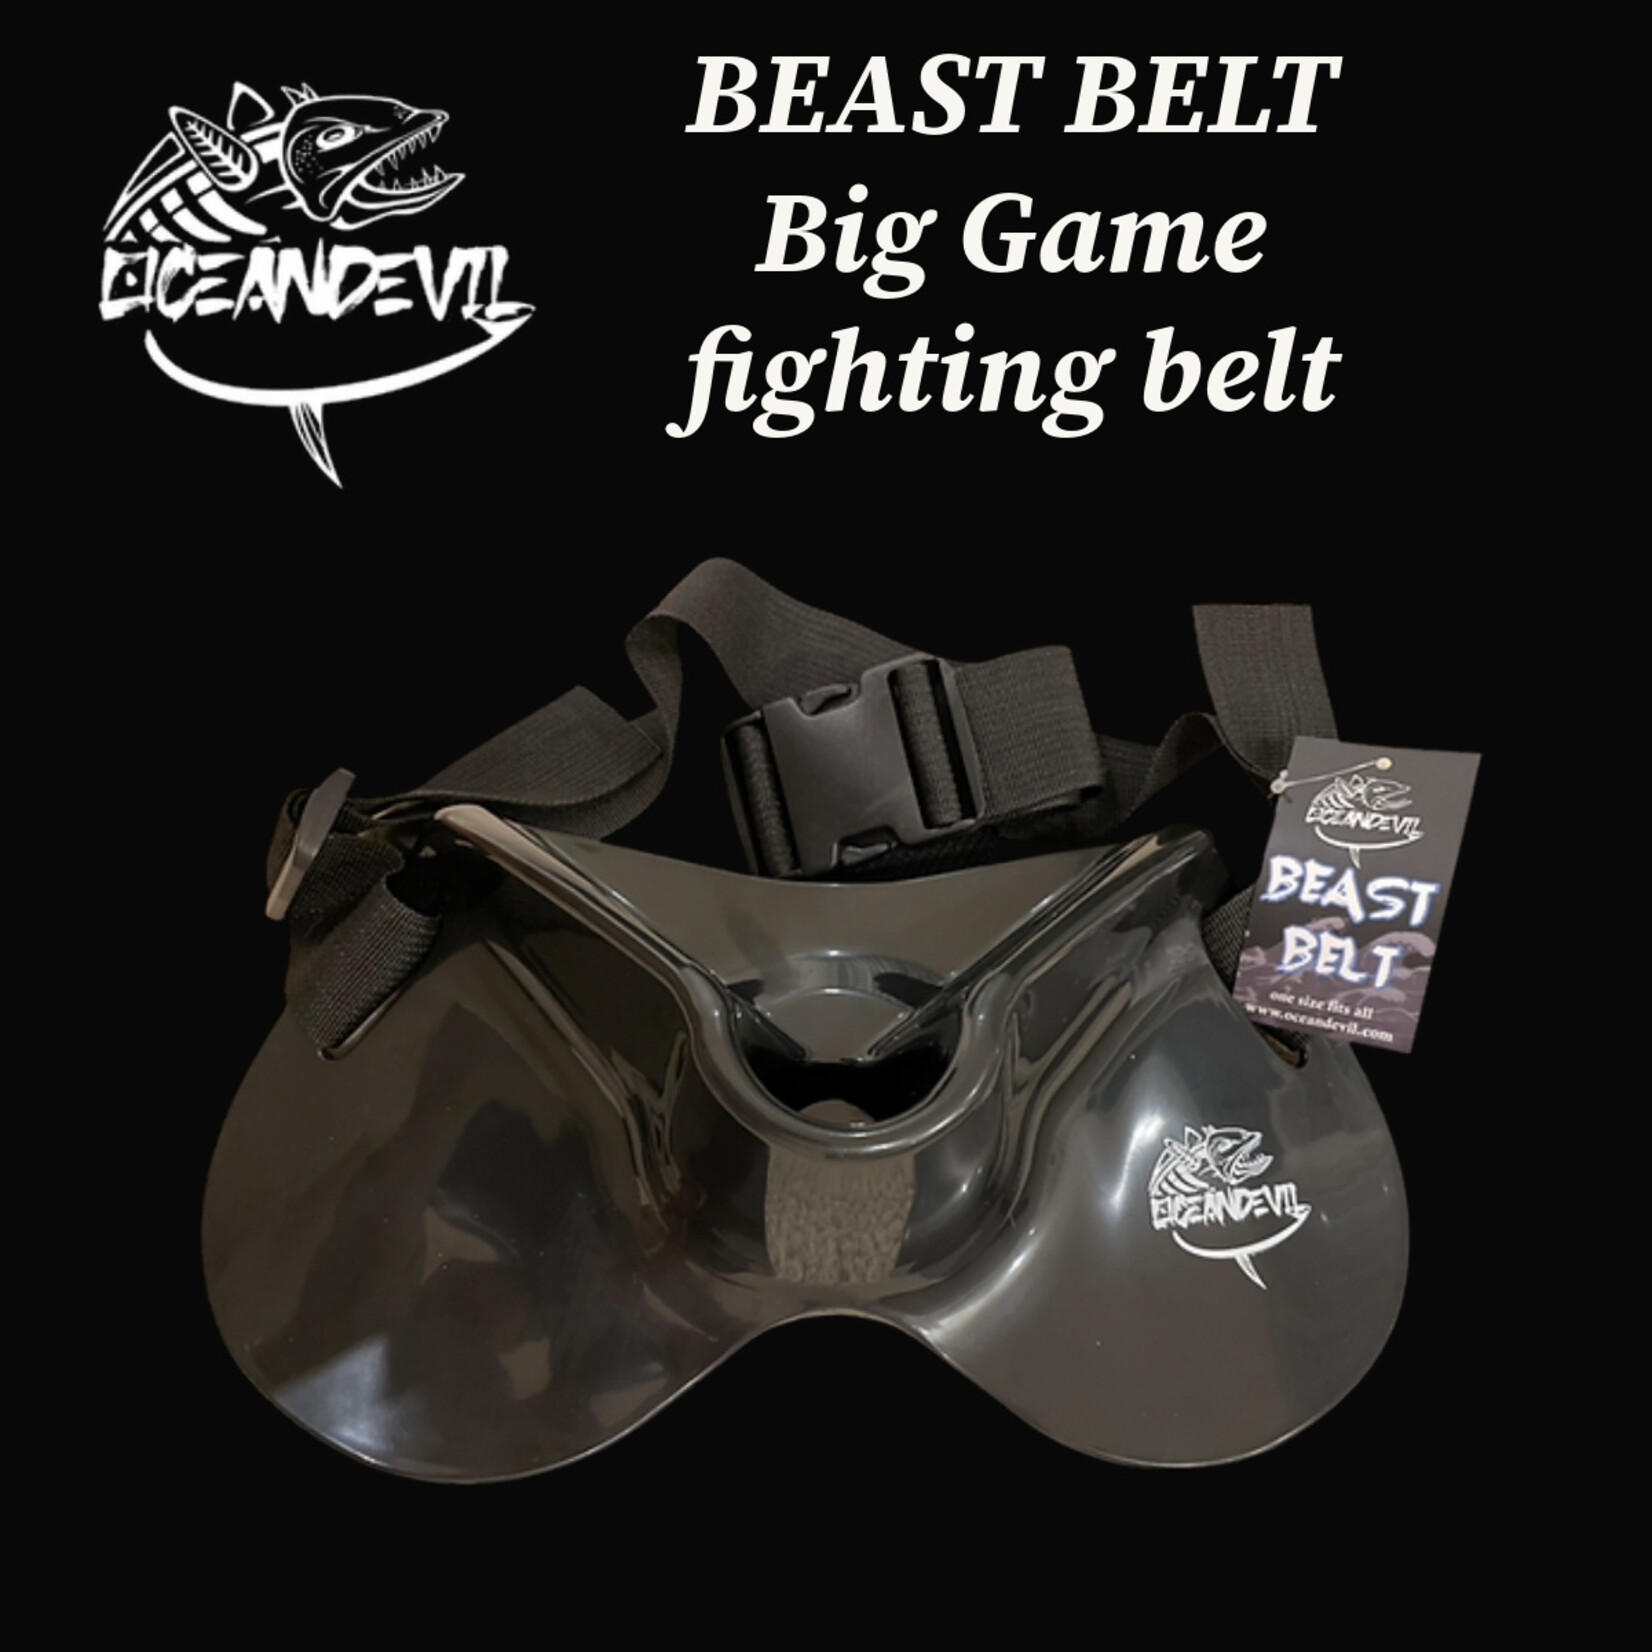 Ocean Devil BEAST BELT - Big Game fighting belt